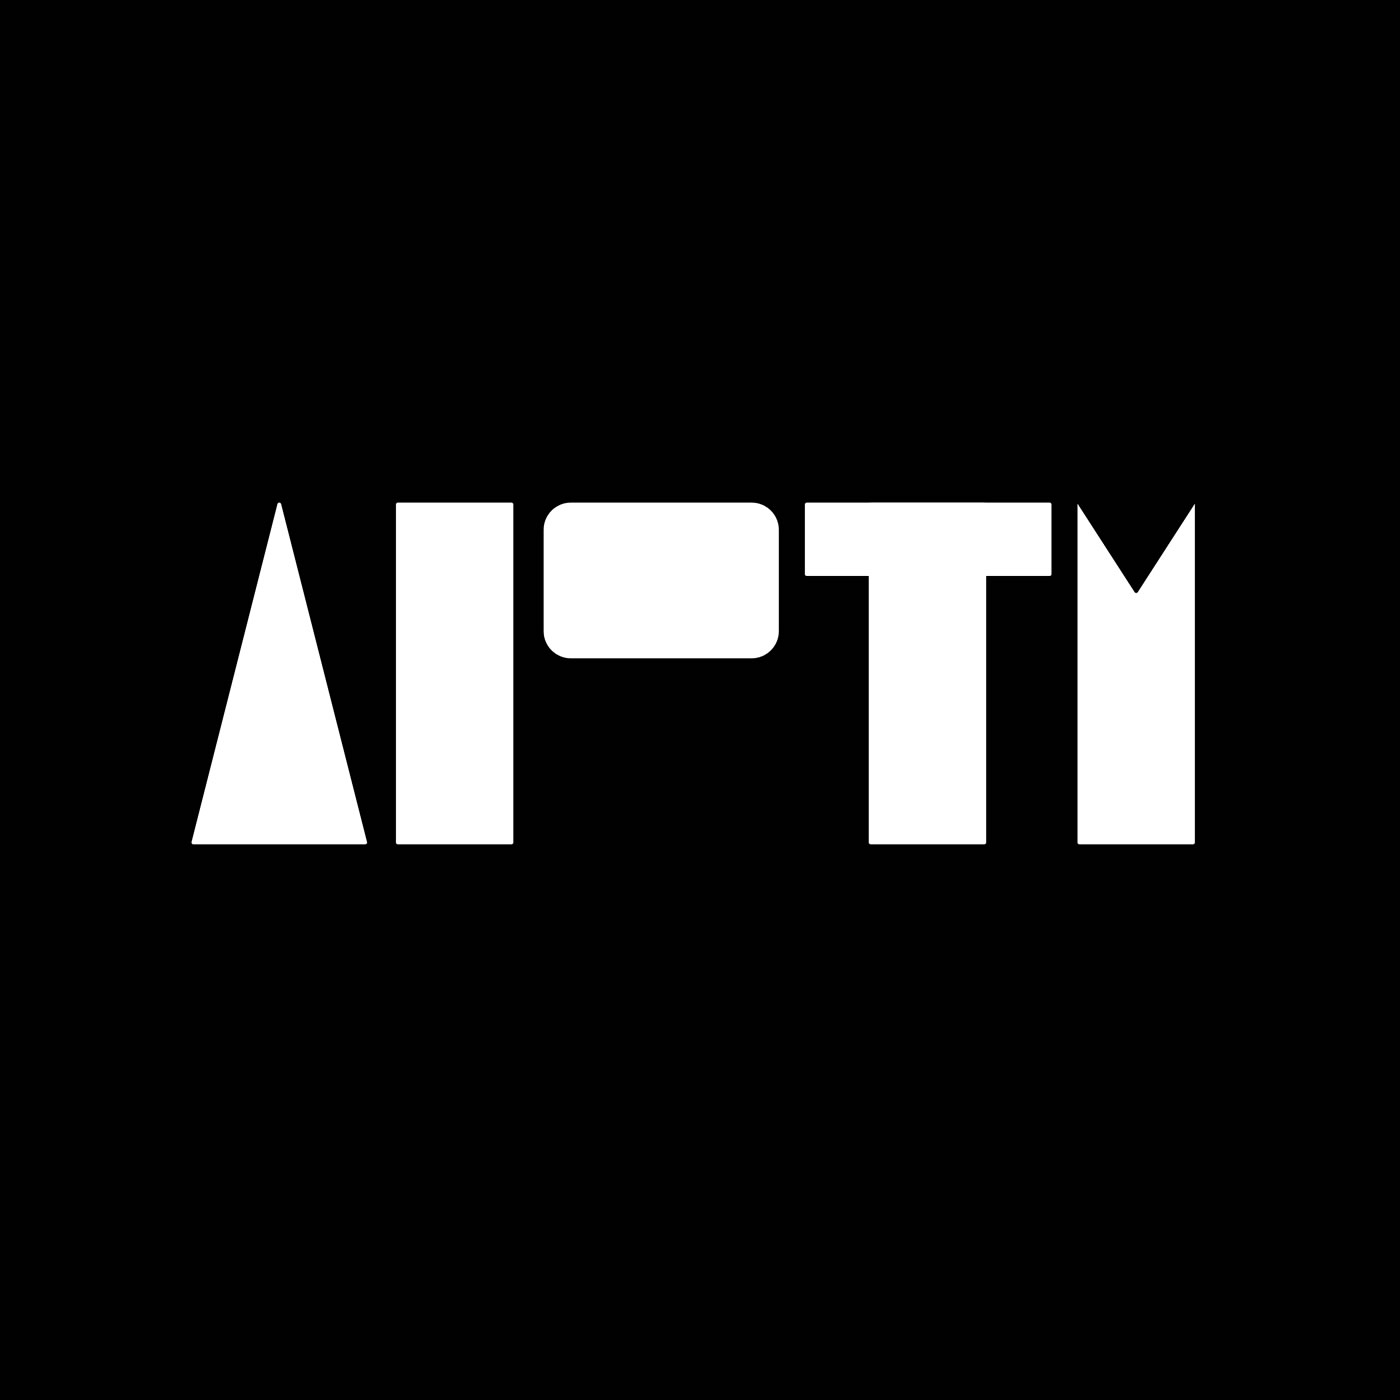 AIOTM - Video Series #3